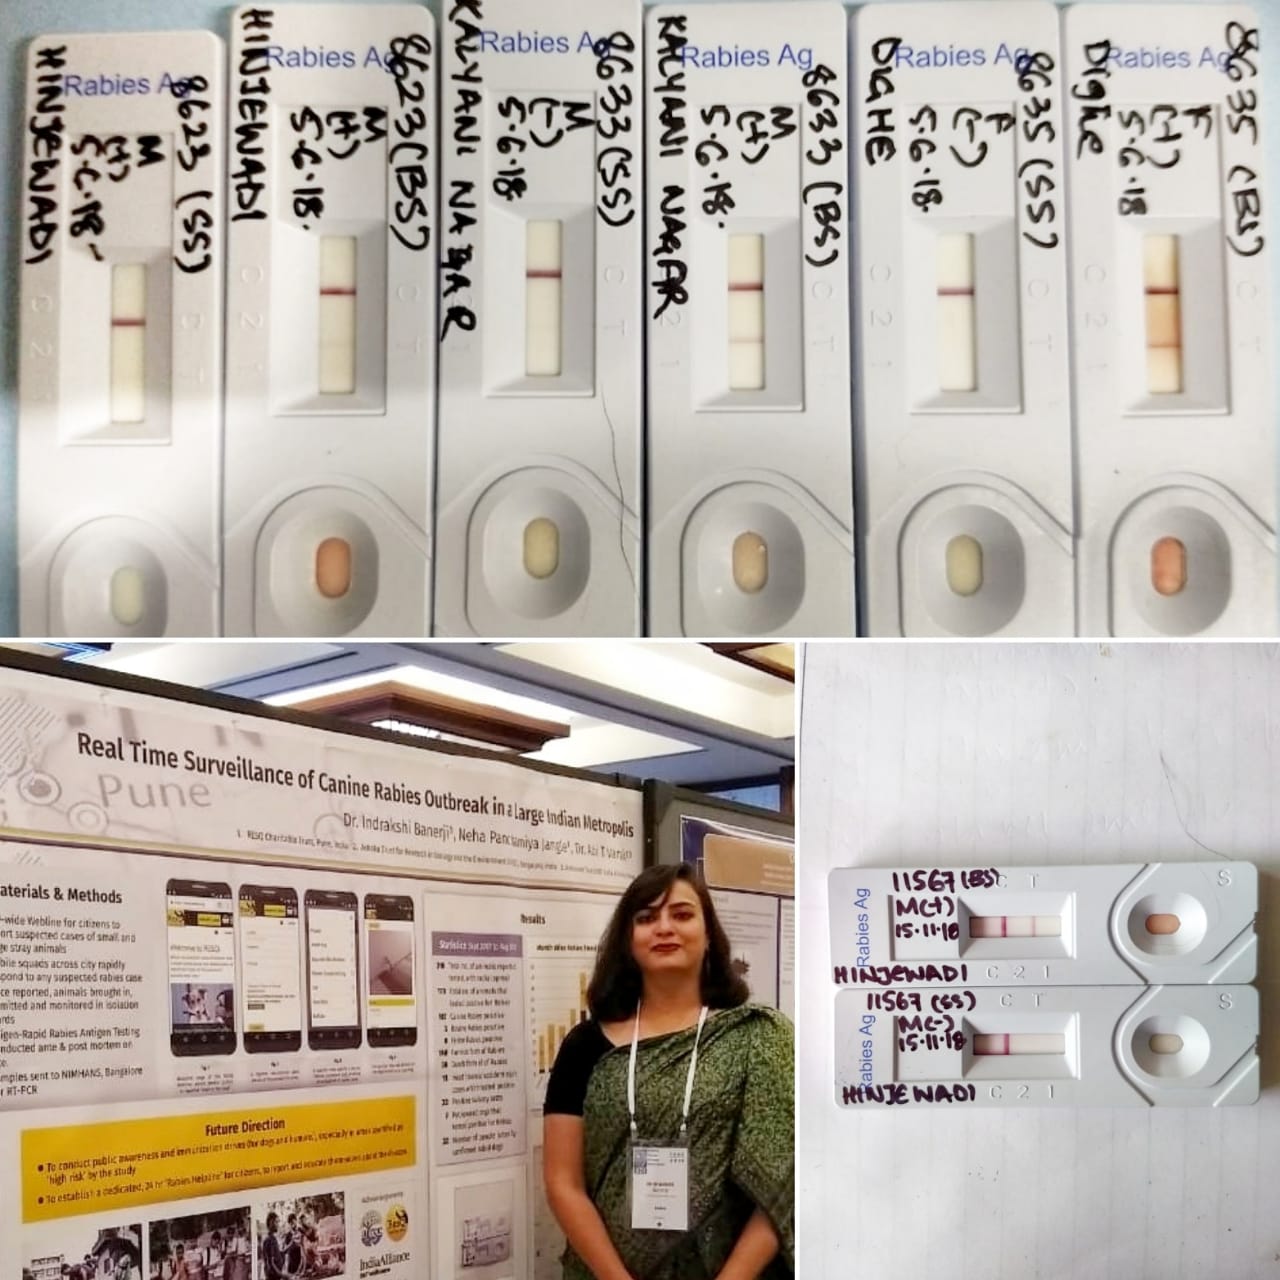 Rabies Testing Kits | Dr. Indrakshi Banerji presenting our work at the CDC in Atlanta (2018)